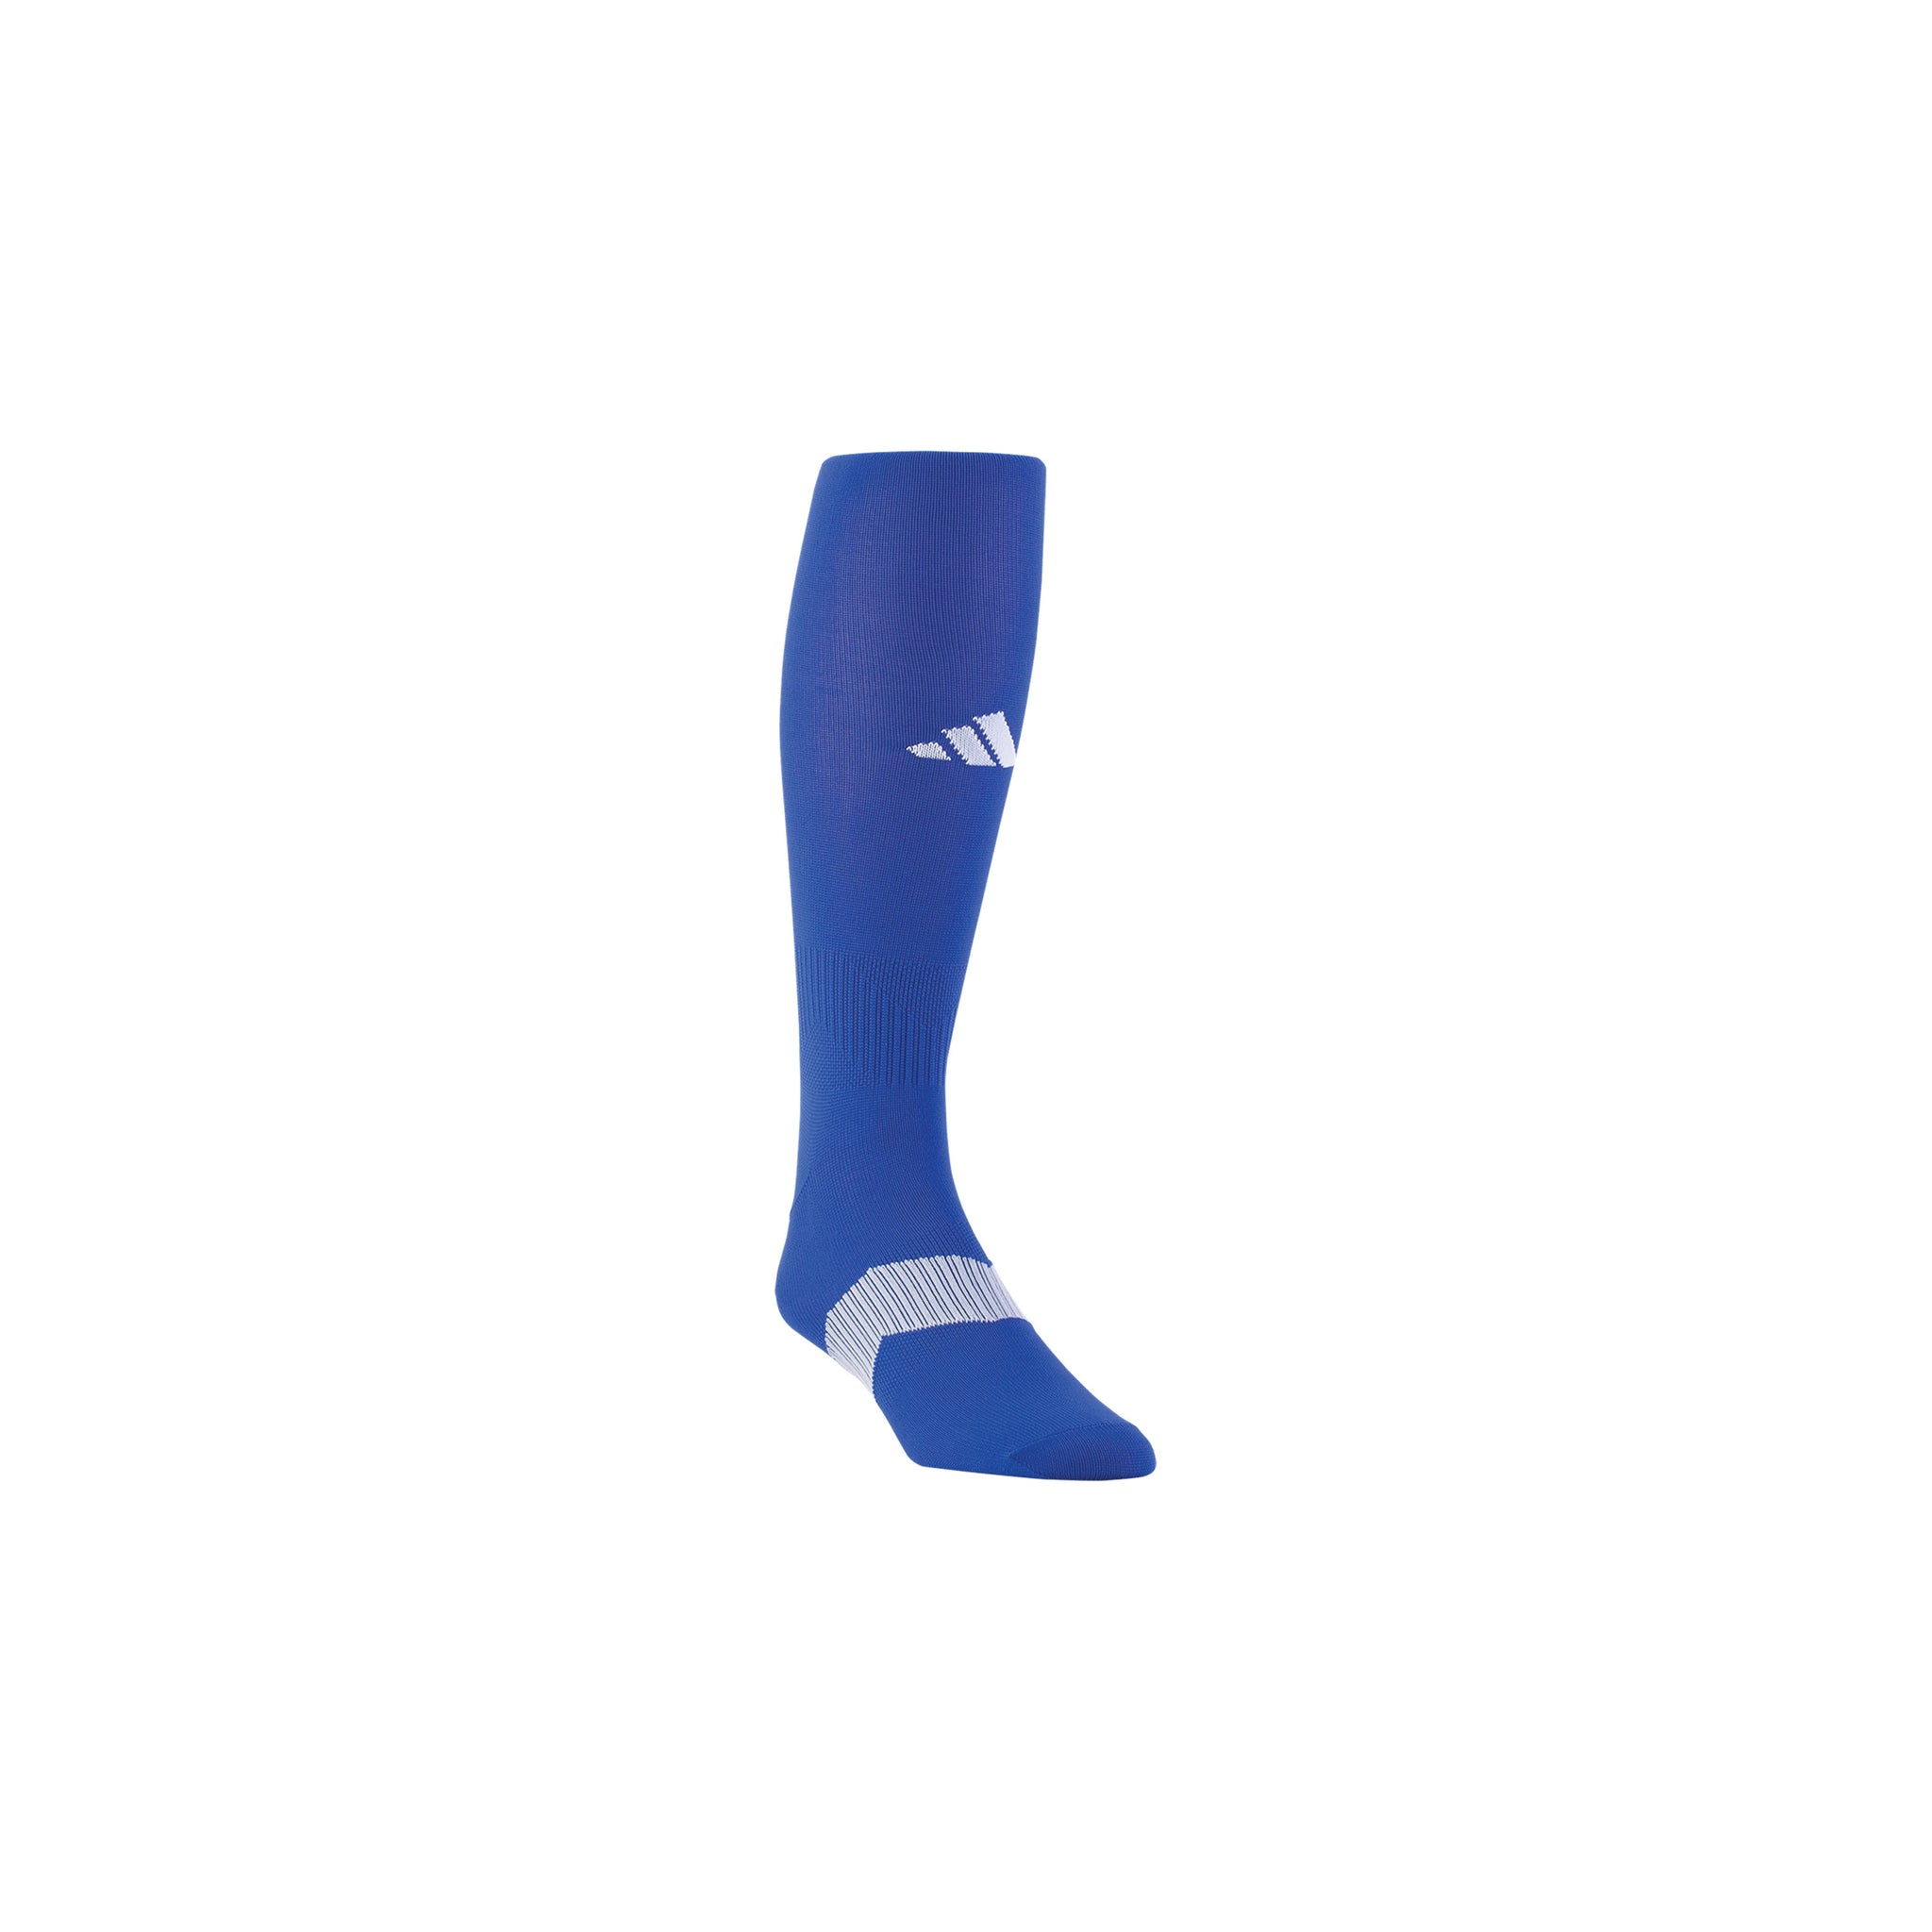 ADIDAS Metro VI Over The Calf Socks (Royal Blue)